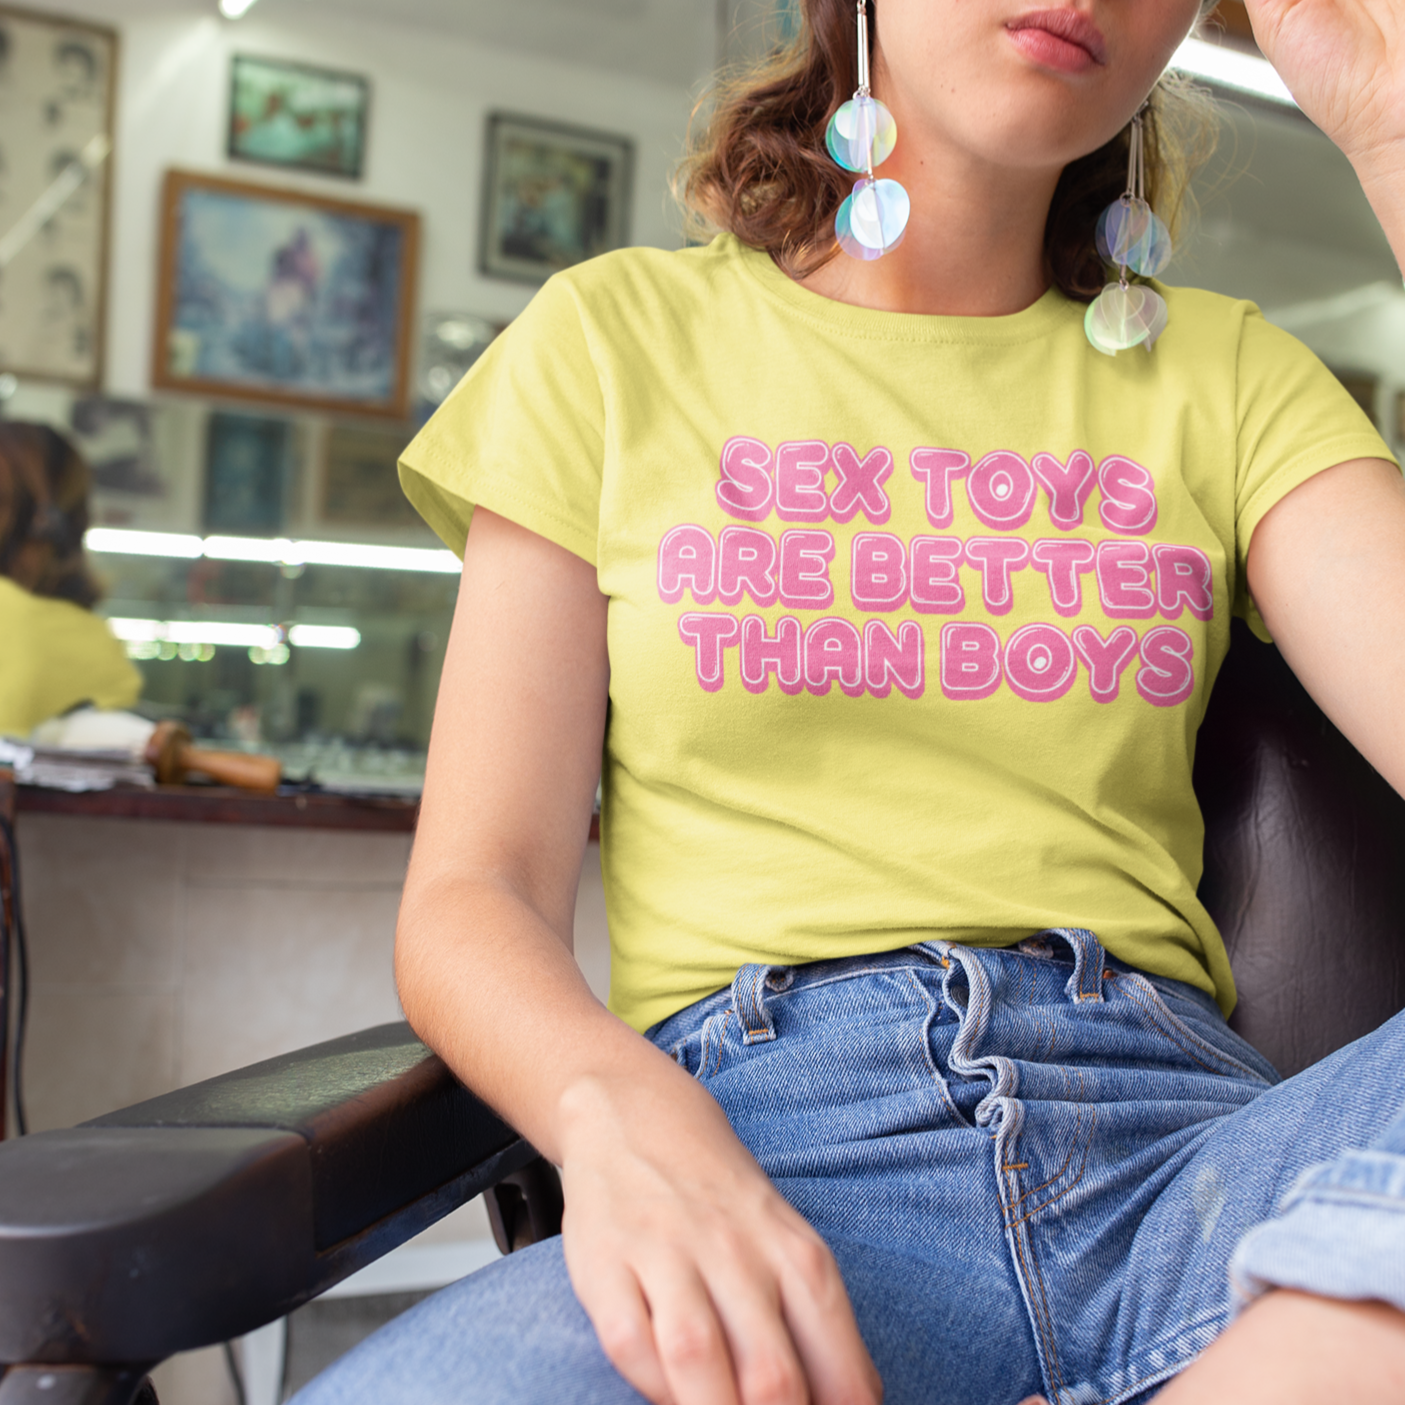 Sex Toys Are Better Than Boys Unisex Feminist T-Shirt - Shop Women’s Rights T-shirts - Feminist Trash Store - Yellow Women’s Shirt